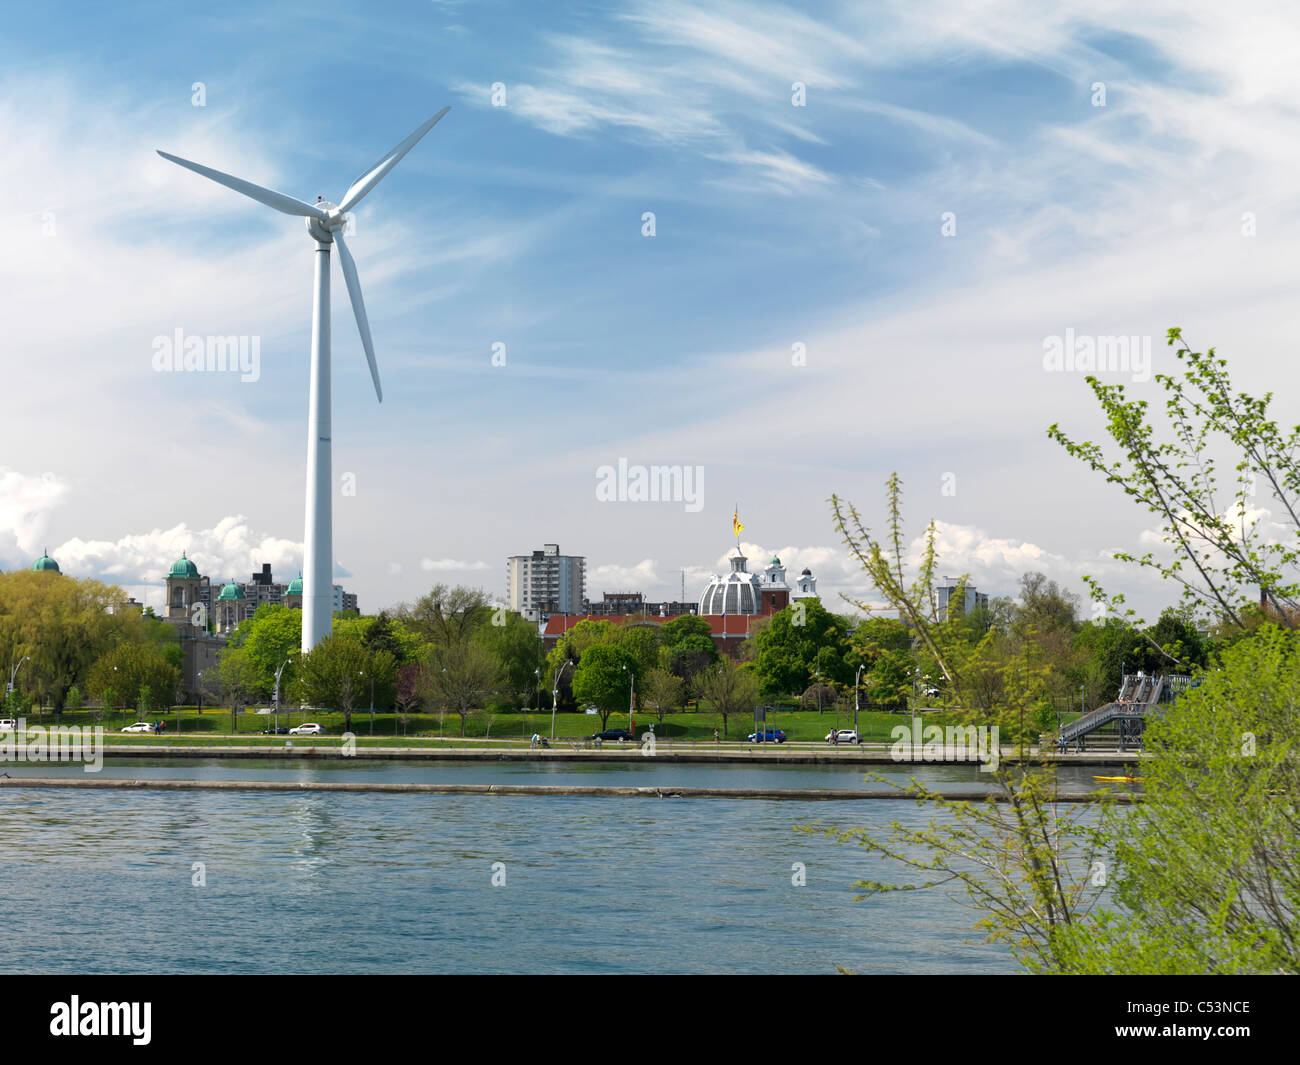 Toronto Hydro urban wind turbine generator Stock Photo